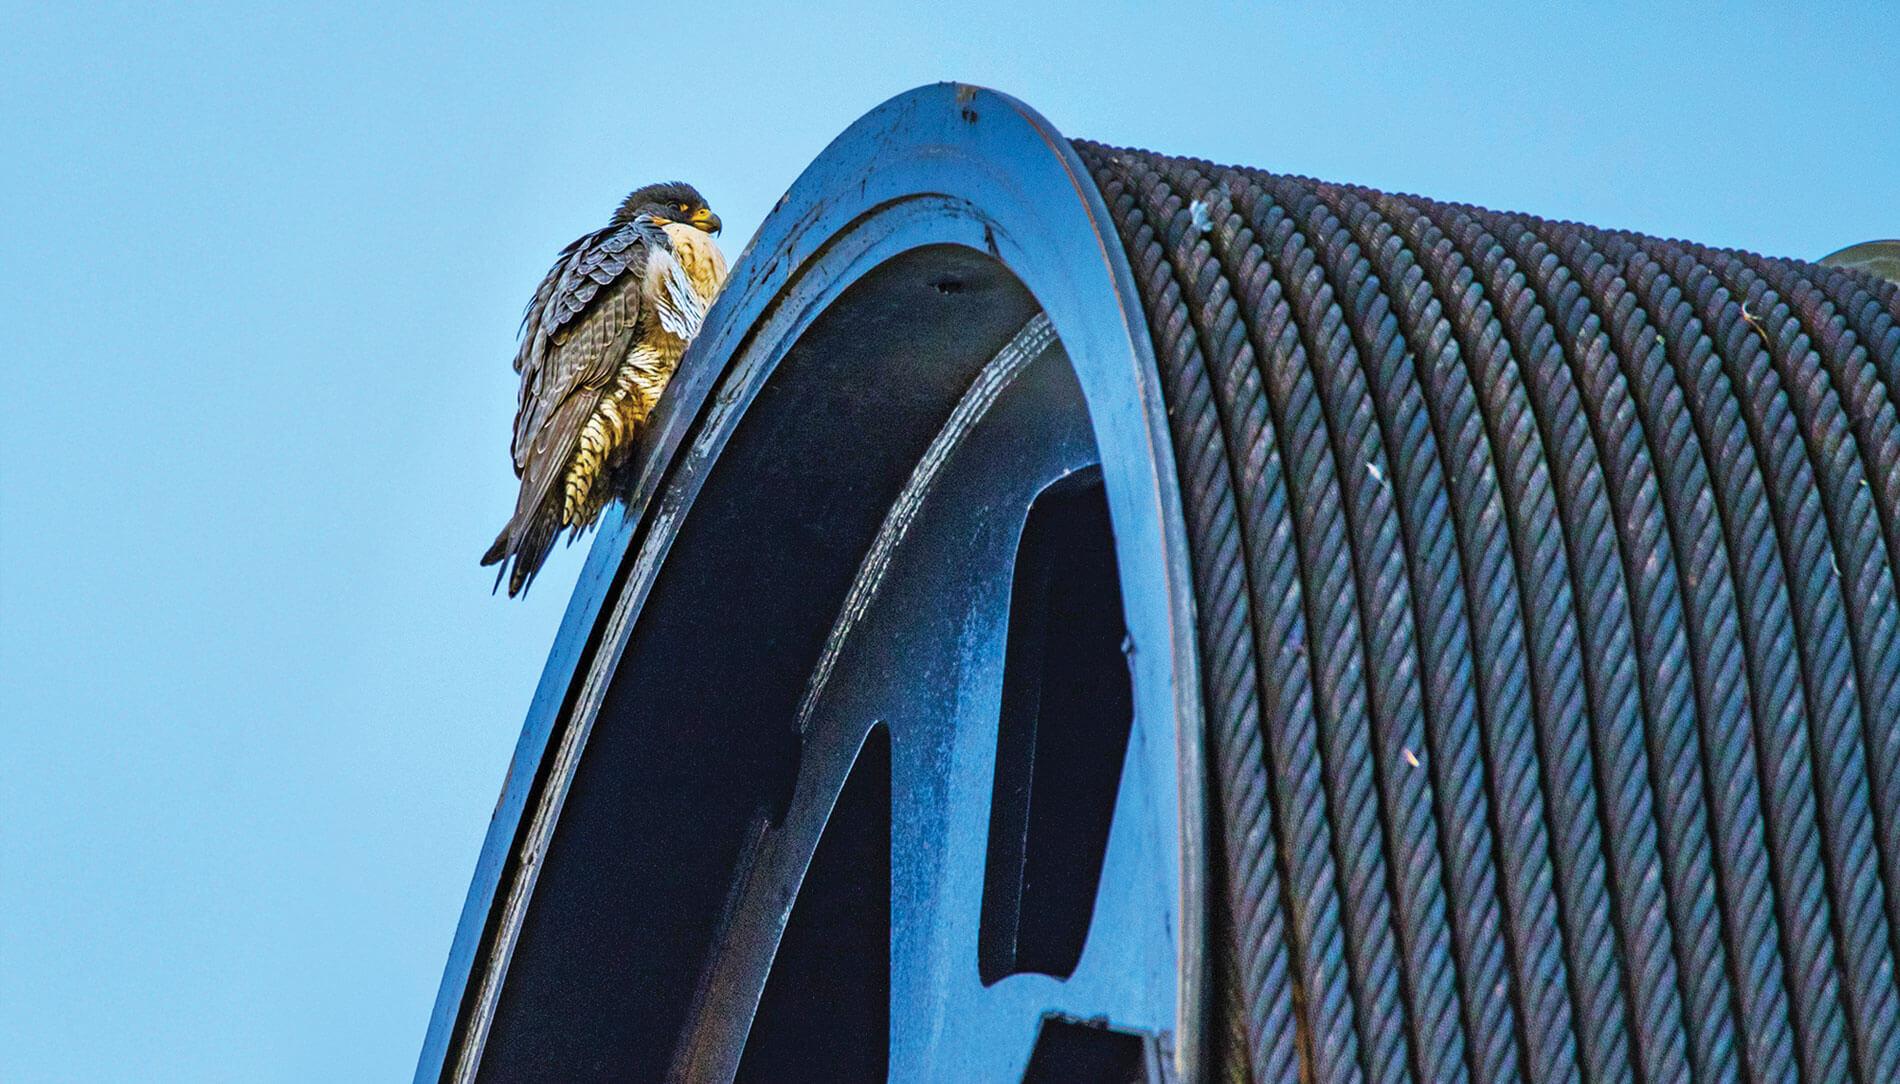 Peregrine falcon on a building